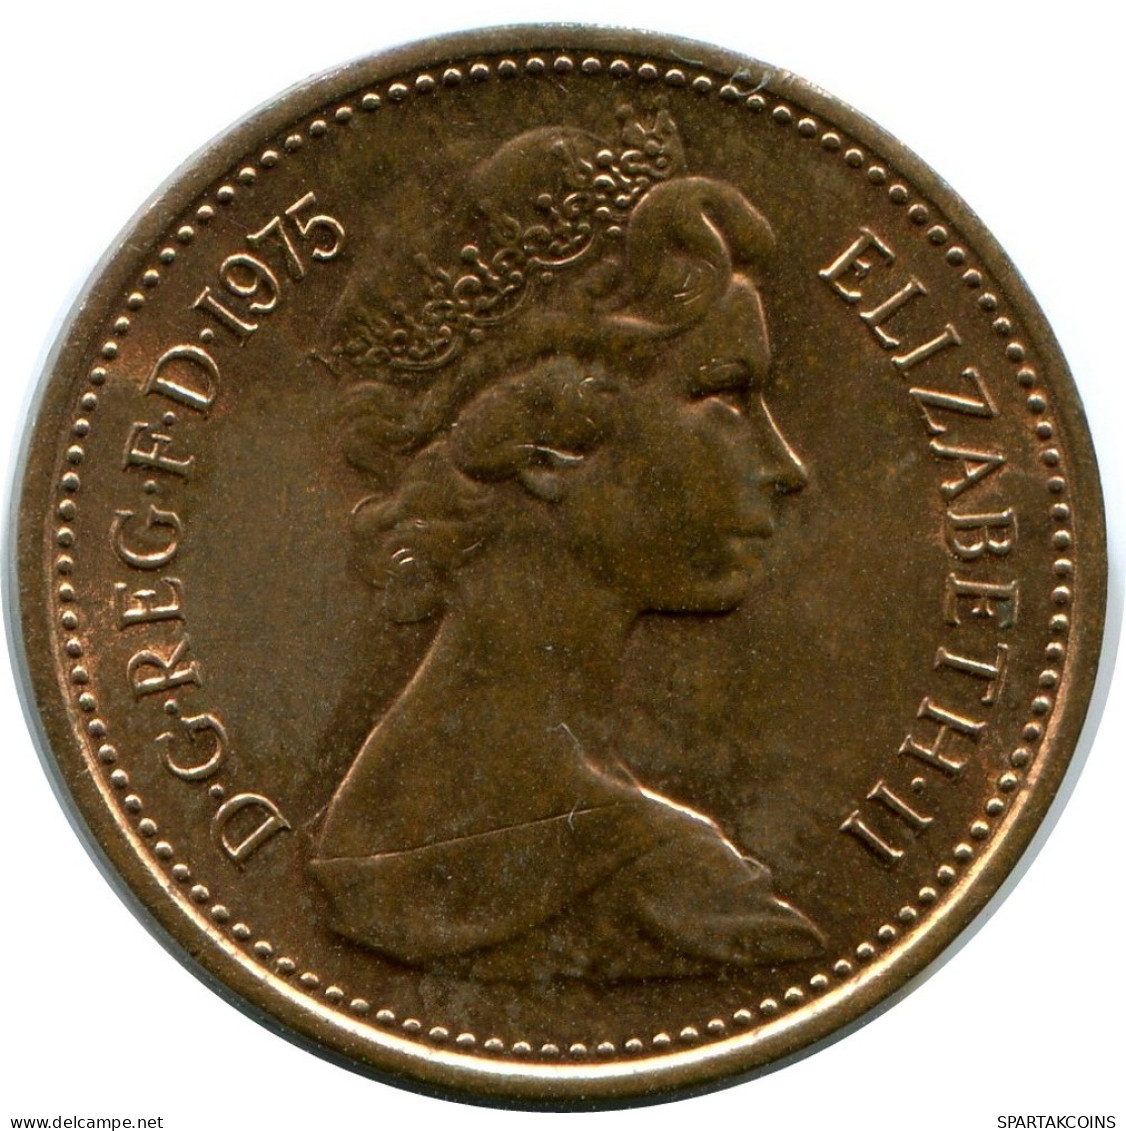 NEW PENNY 1975 UK GROßBRITANNIEN GREAT BRITAIN Münze #AZ039.D.A - 1 Penny & 1 New Penny